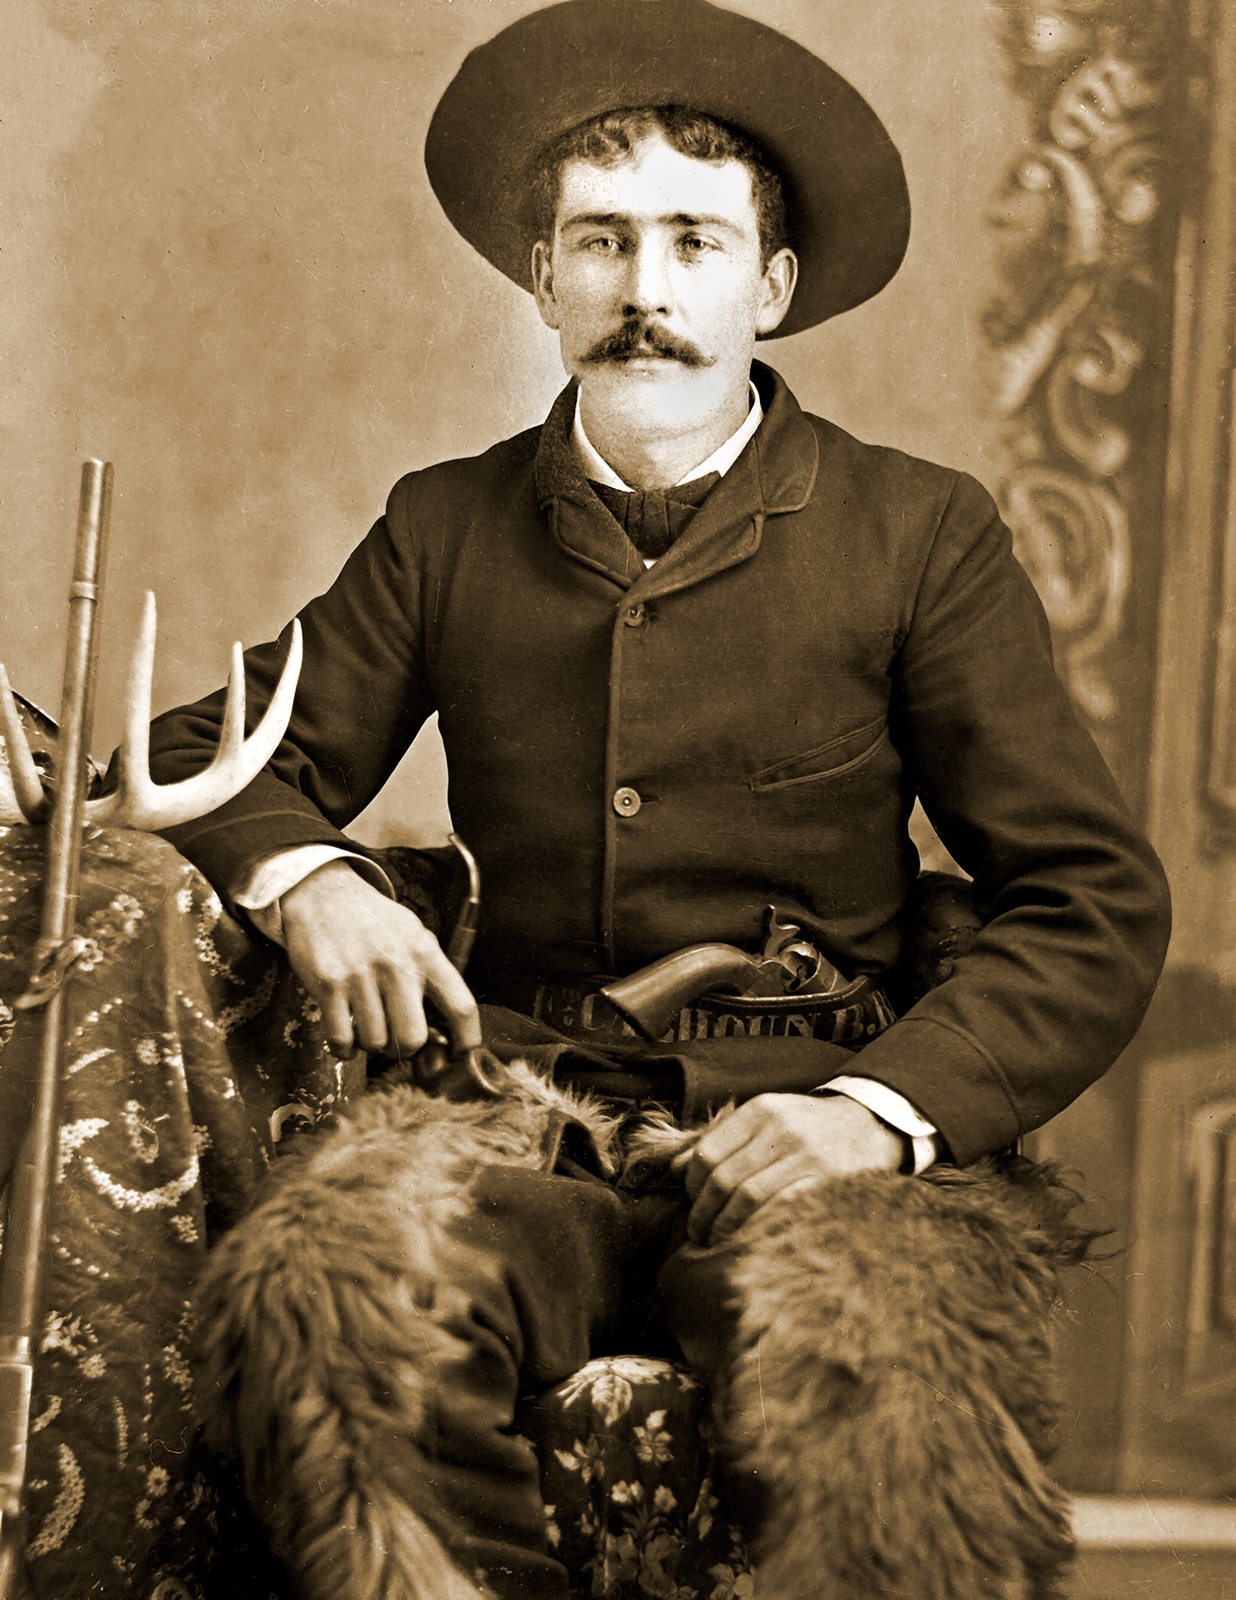 1885 Cowboy vintage photo gun, mustache and buffalo chaps